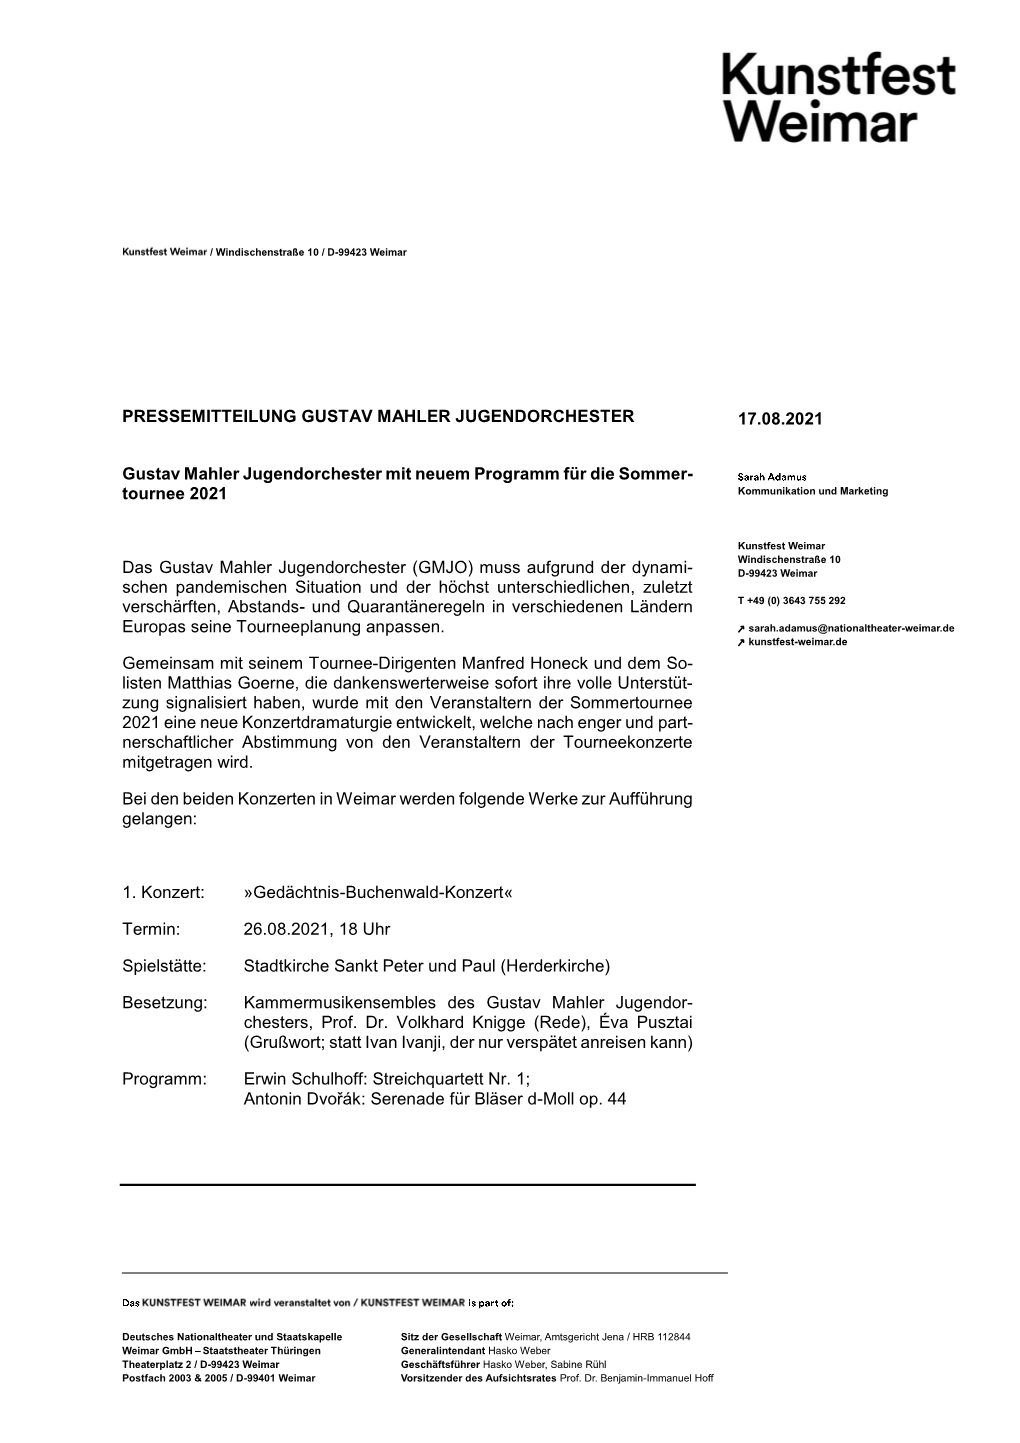 Pressemitteilung Gustav Mahler Jugendorchester 17.08.2021